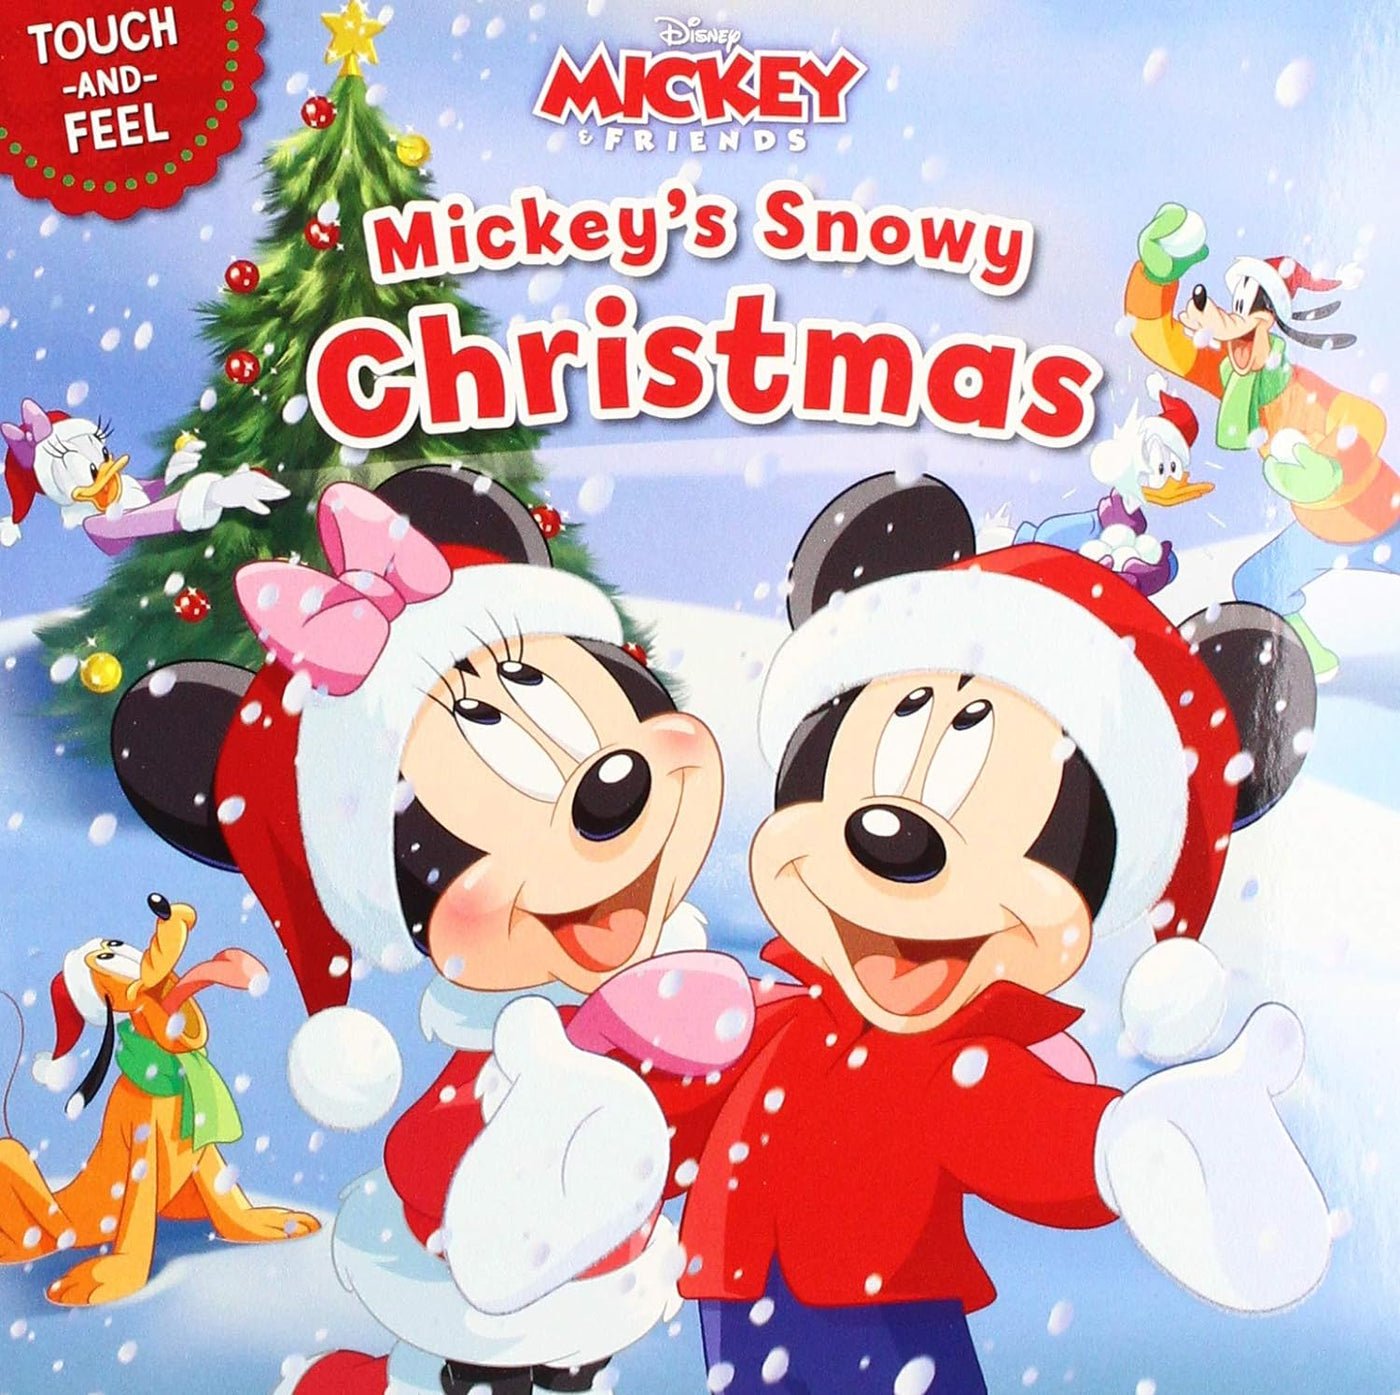 Mickey & Friend's: Mickey's Snowy Christmas